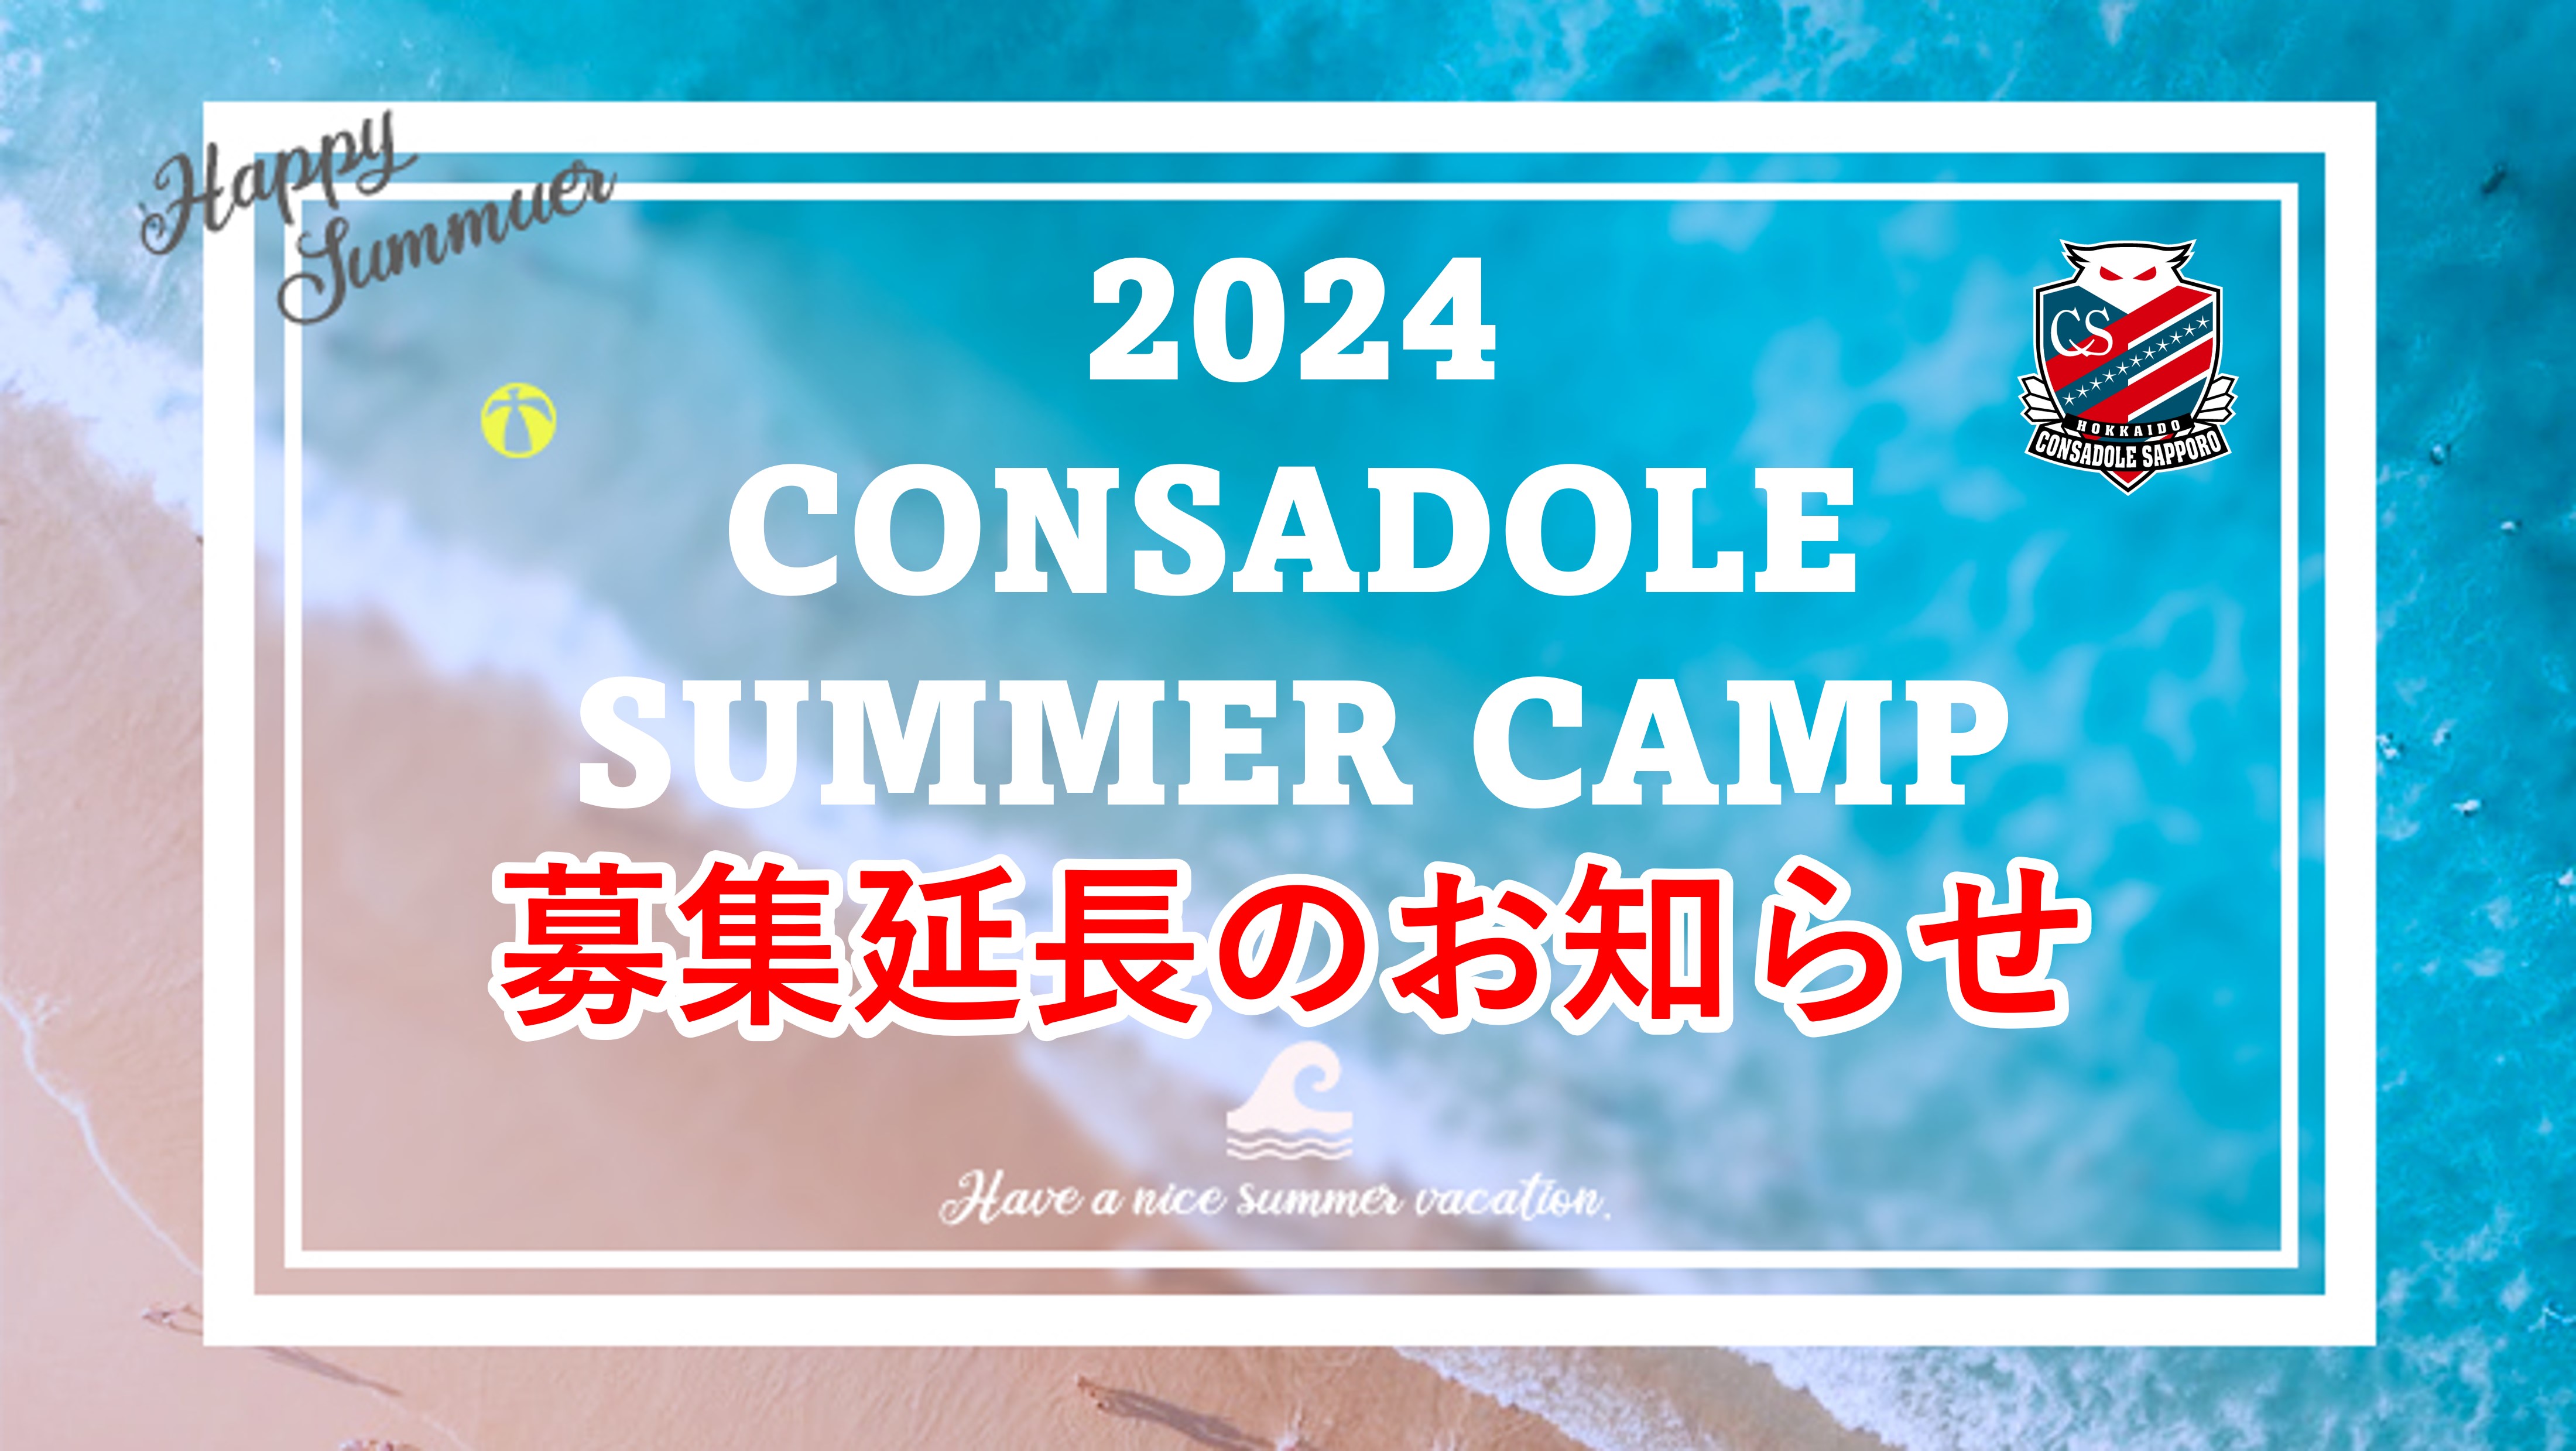 「CONSADOLE SUMMER CAMP 2024」募集期間延長のお知らせ※スクール生限定